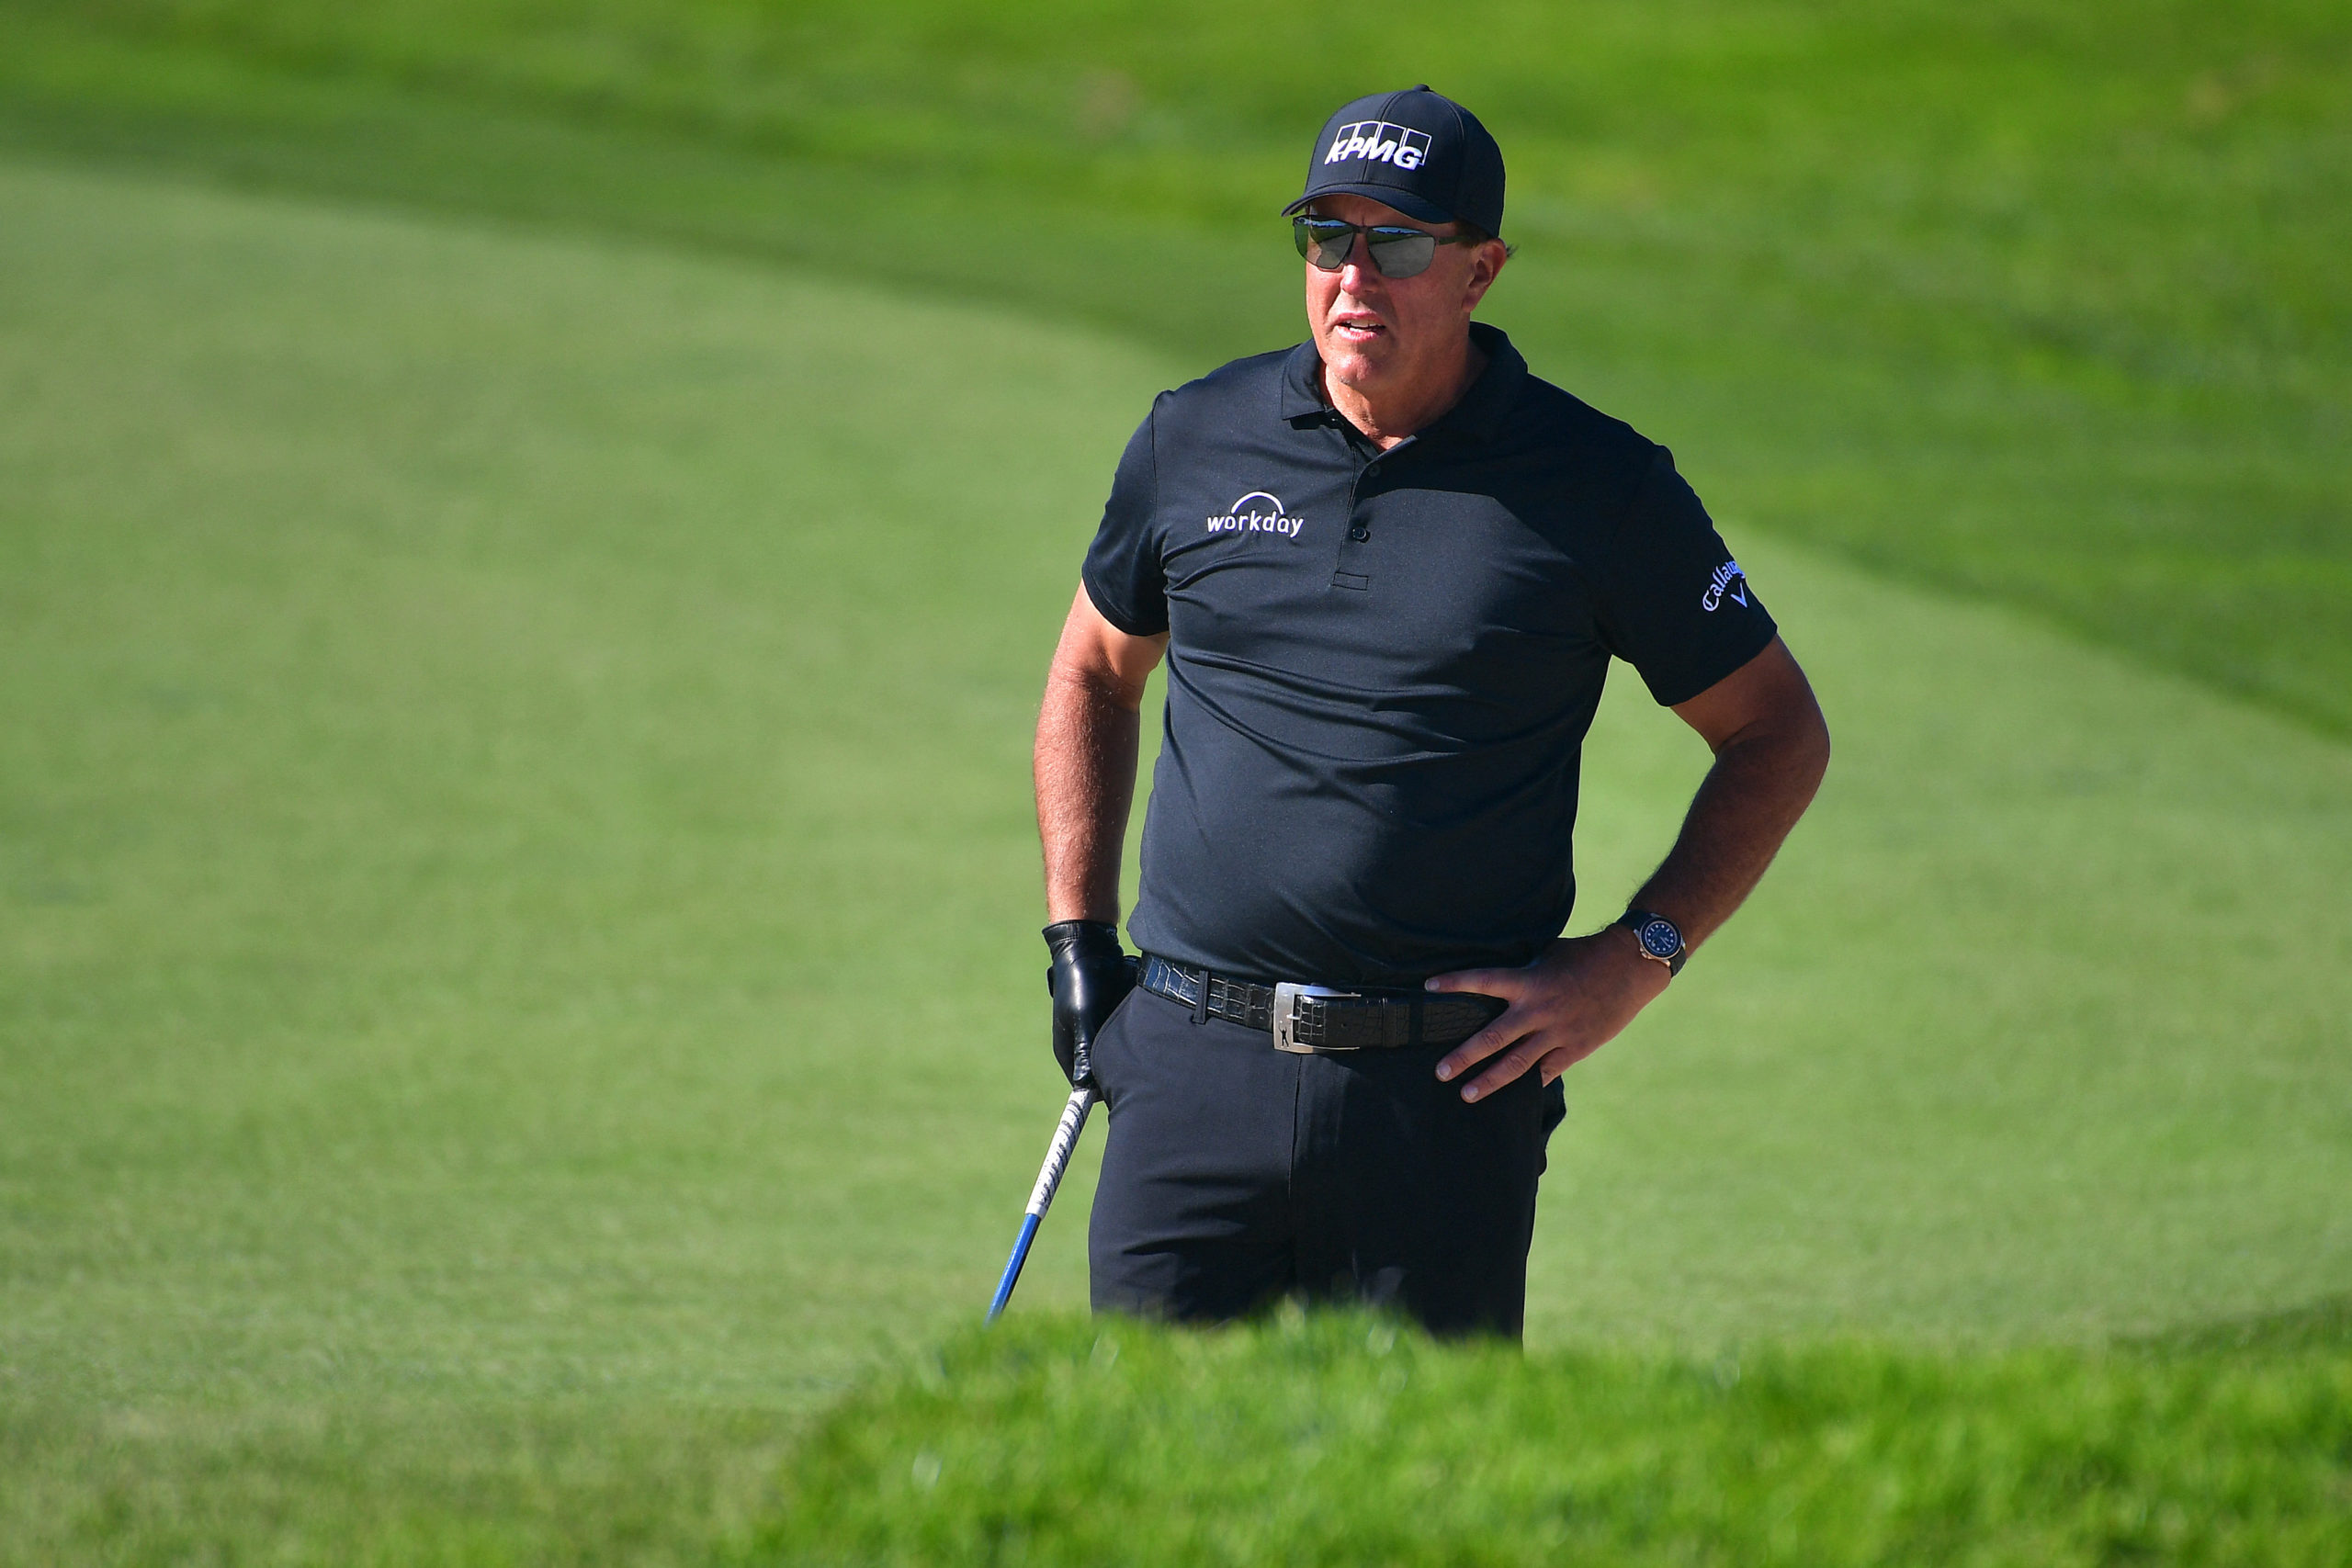 Juara bertahan Mickelson mengundurkan diri dari PGA Championship